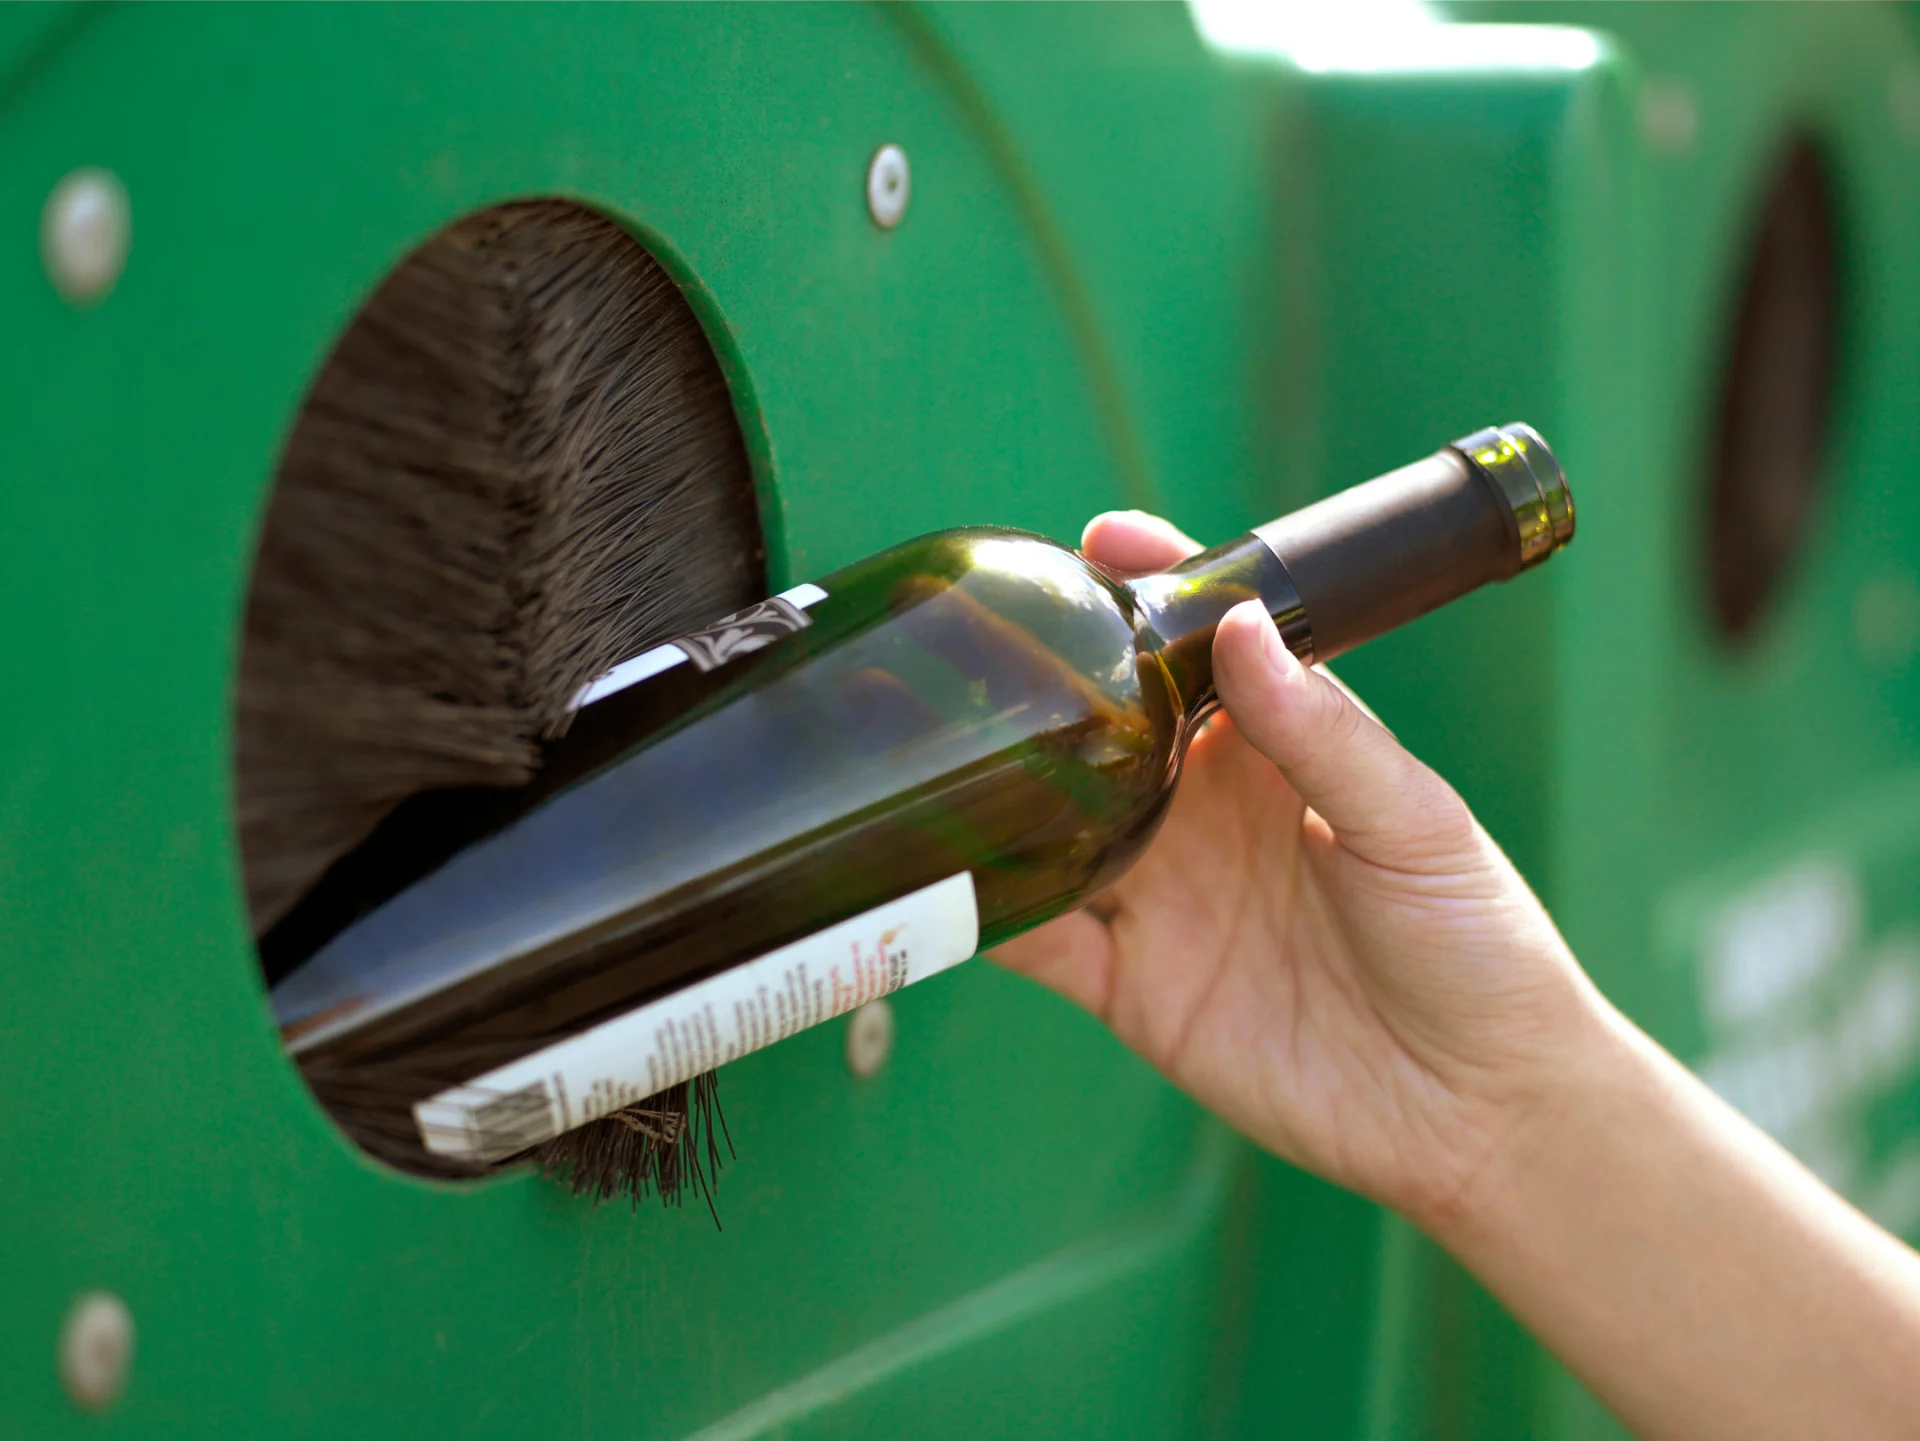 A hand puts a green bottle in a glass trash bin